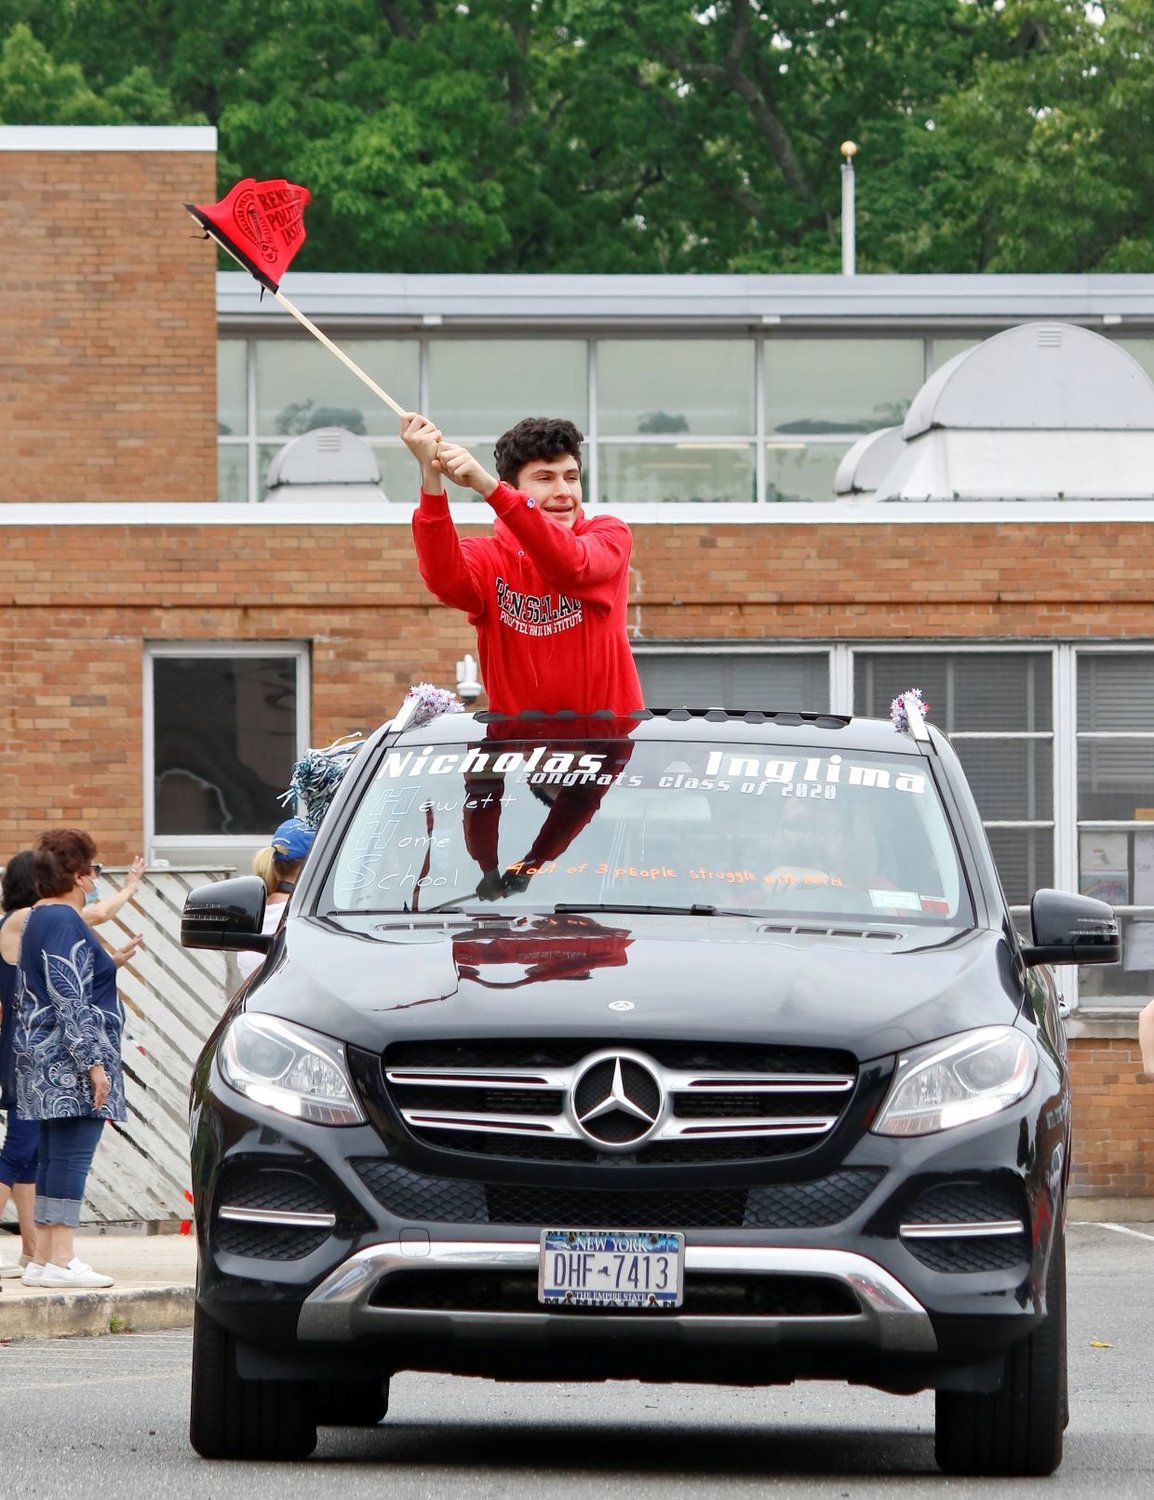 Hewlett High School graduate Nicholas Inglima celebrated during the vehicle caravan on June 5.